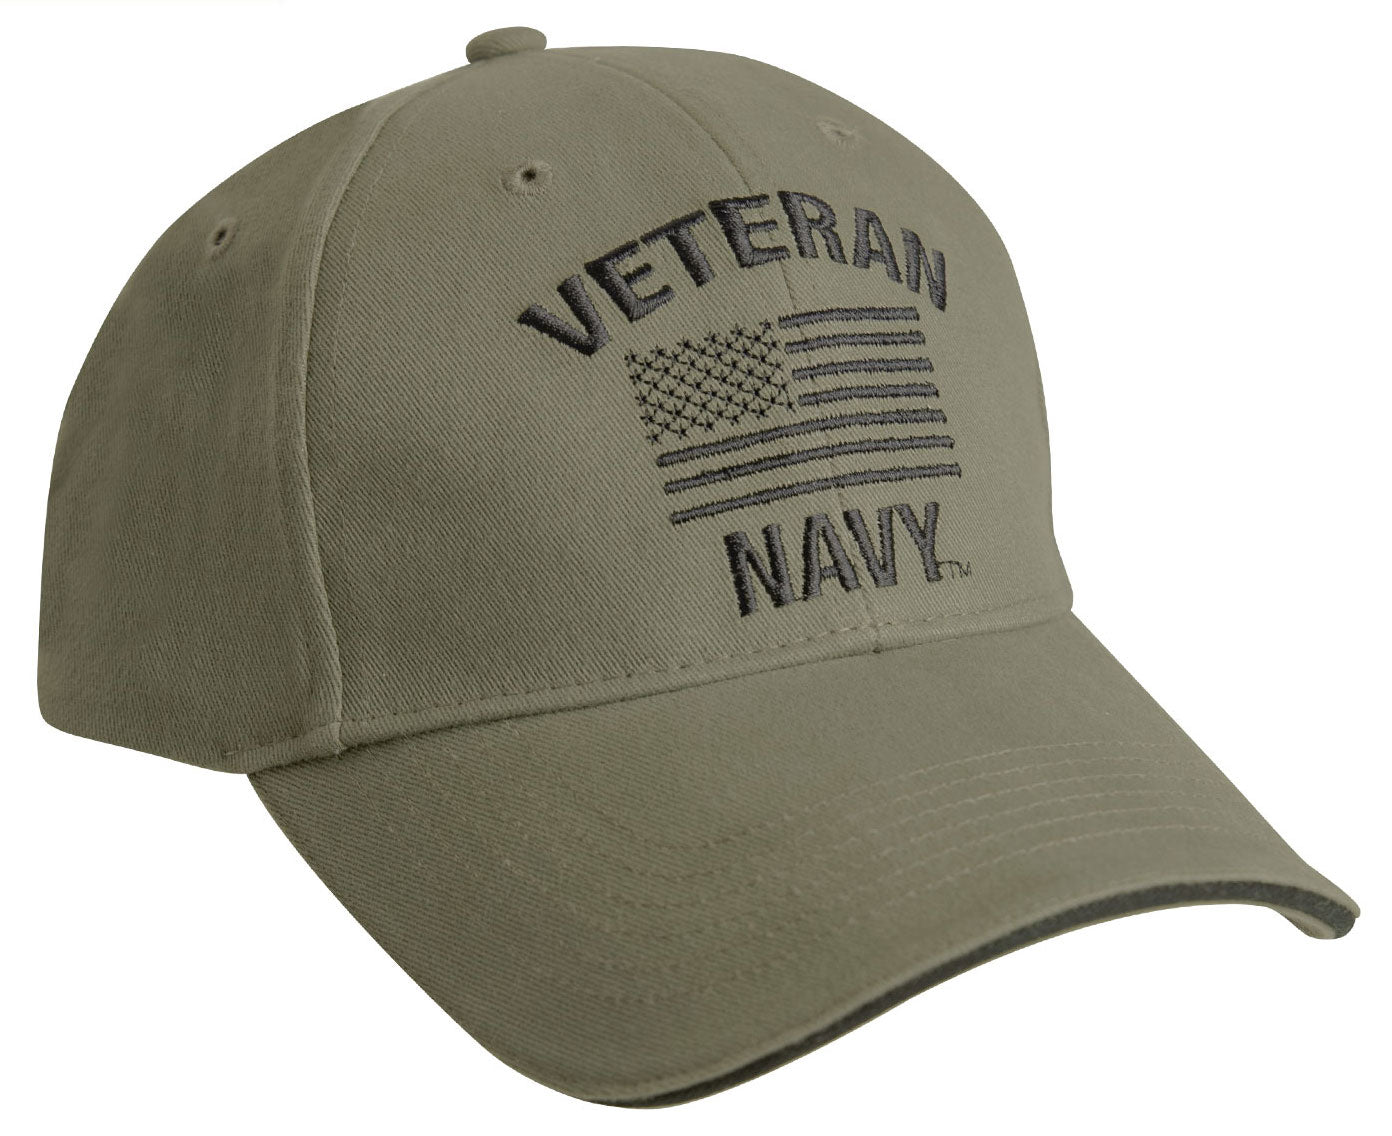 Vintage Veteran Low Profile Cap